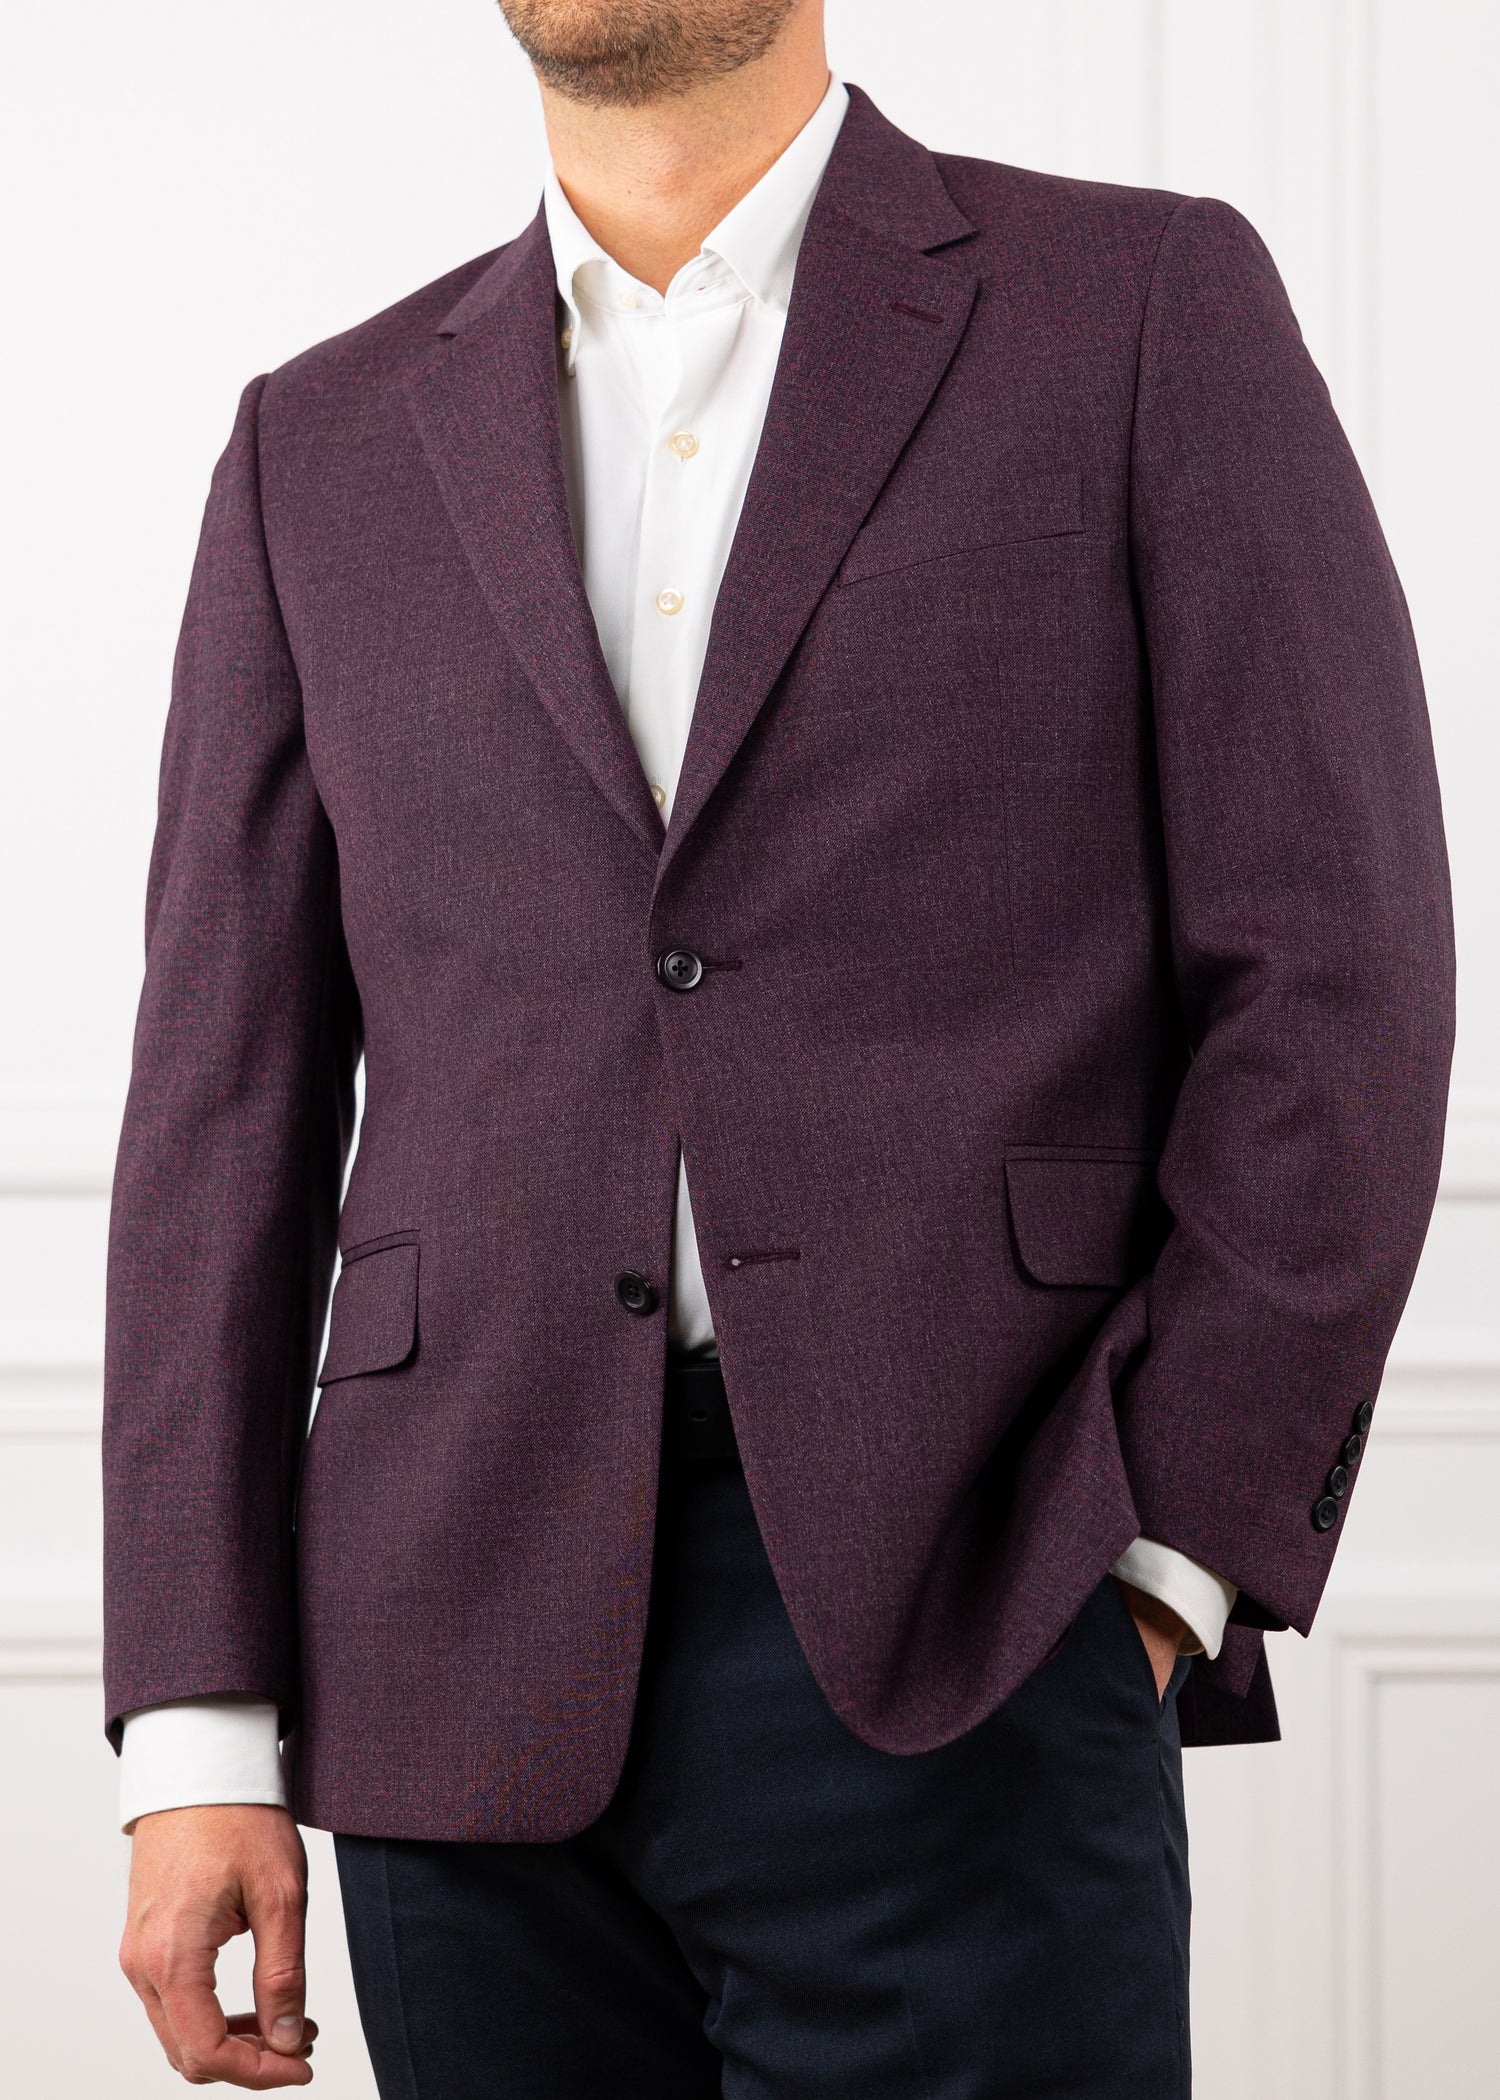 Empire Clothing Men's Burgundy Wool Blazer